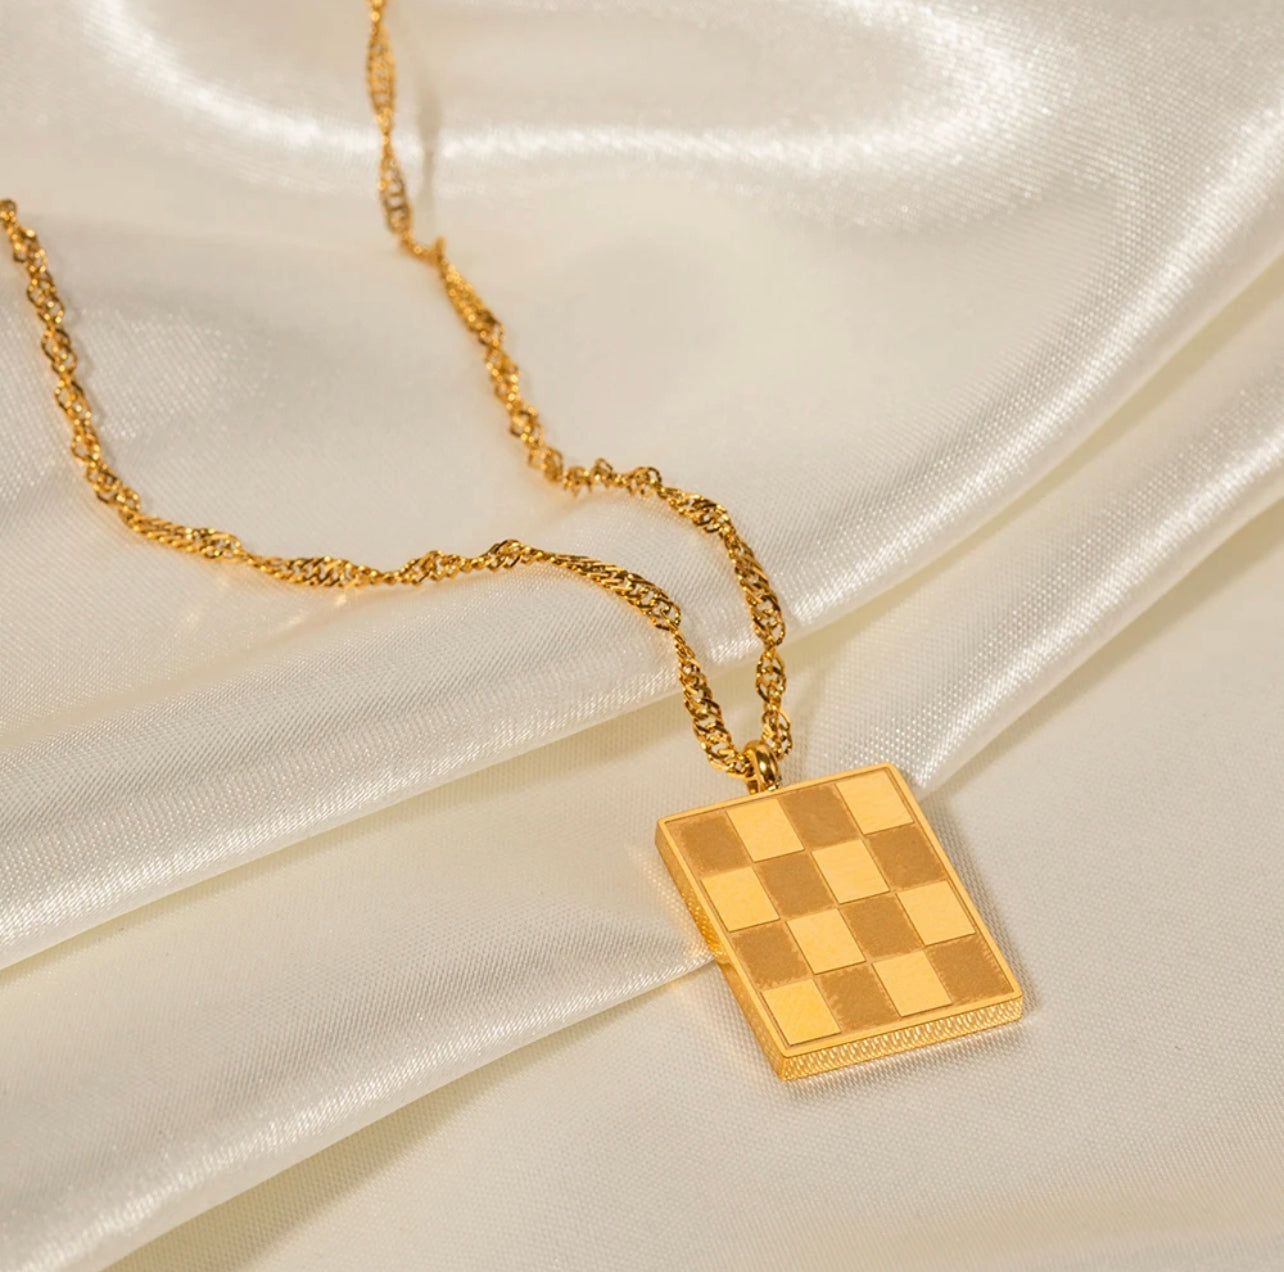 Gold Checker Necklace